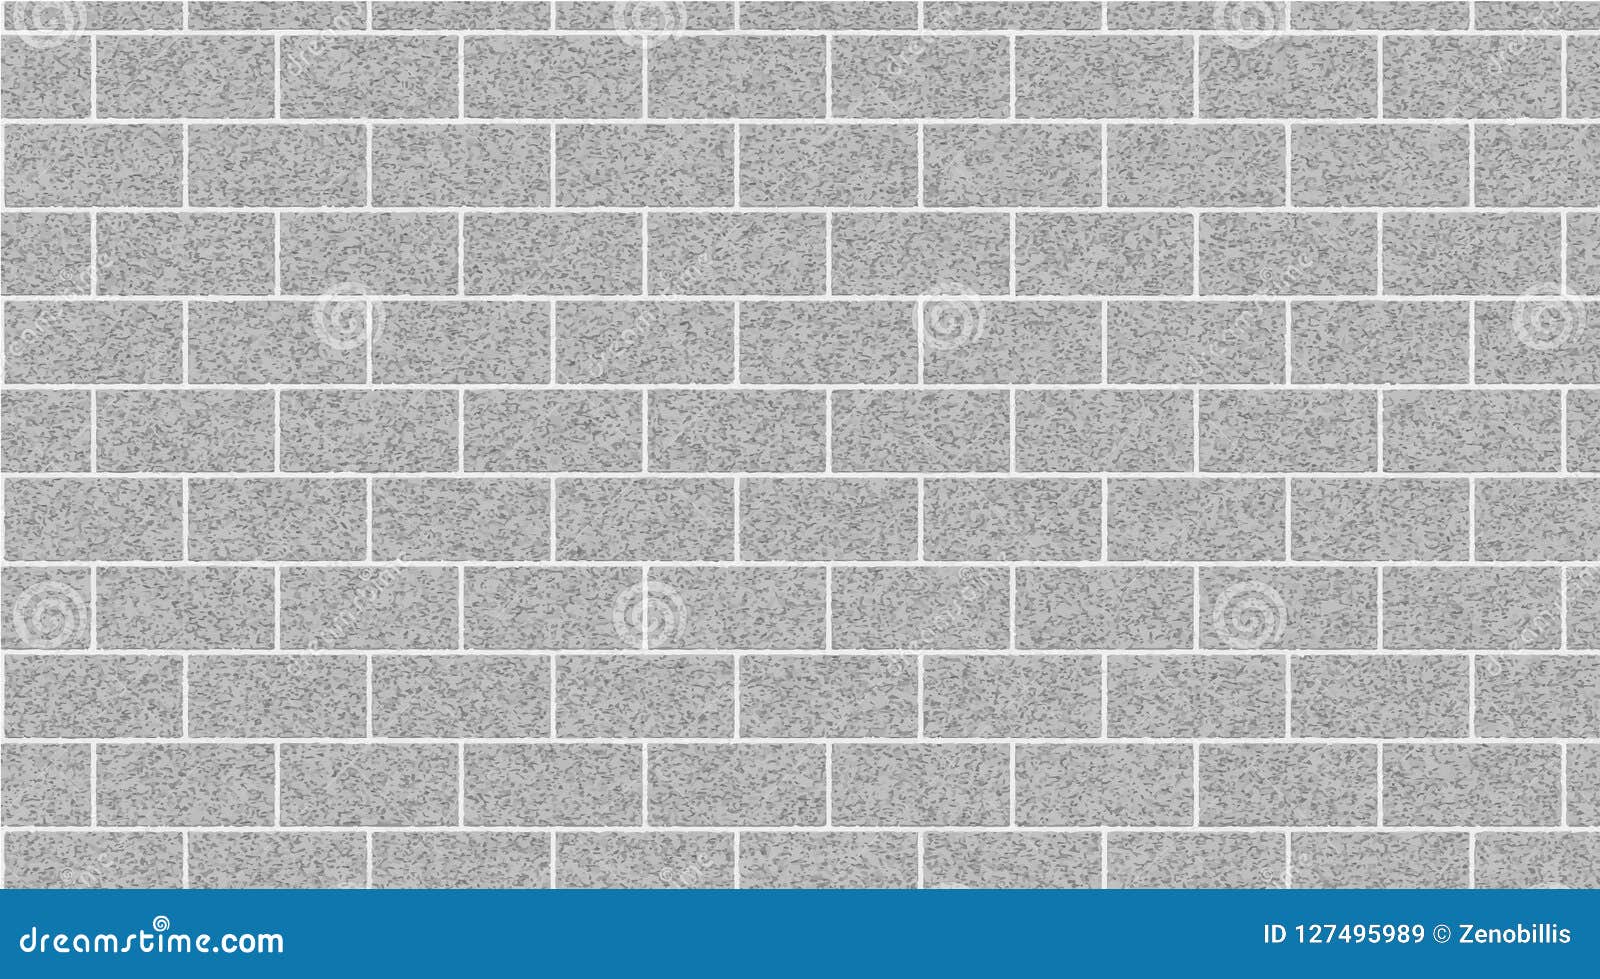 light gray brick wall abstract background. texture of bricks.  